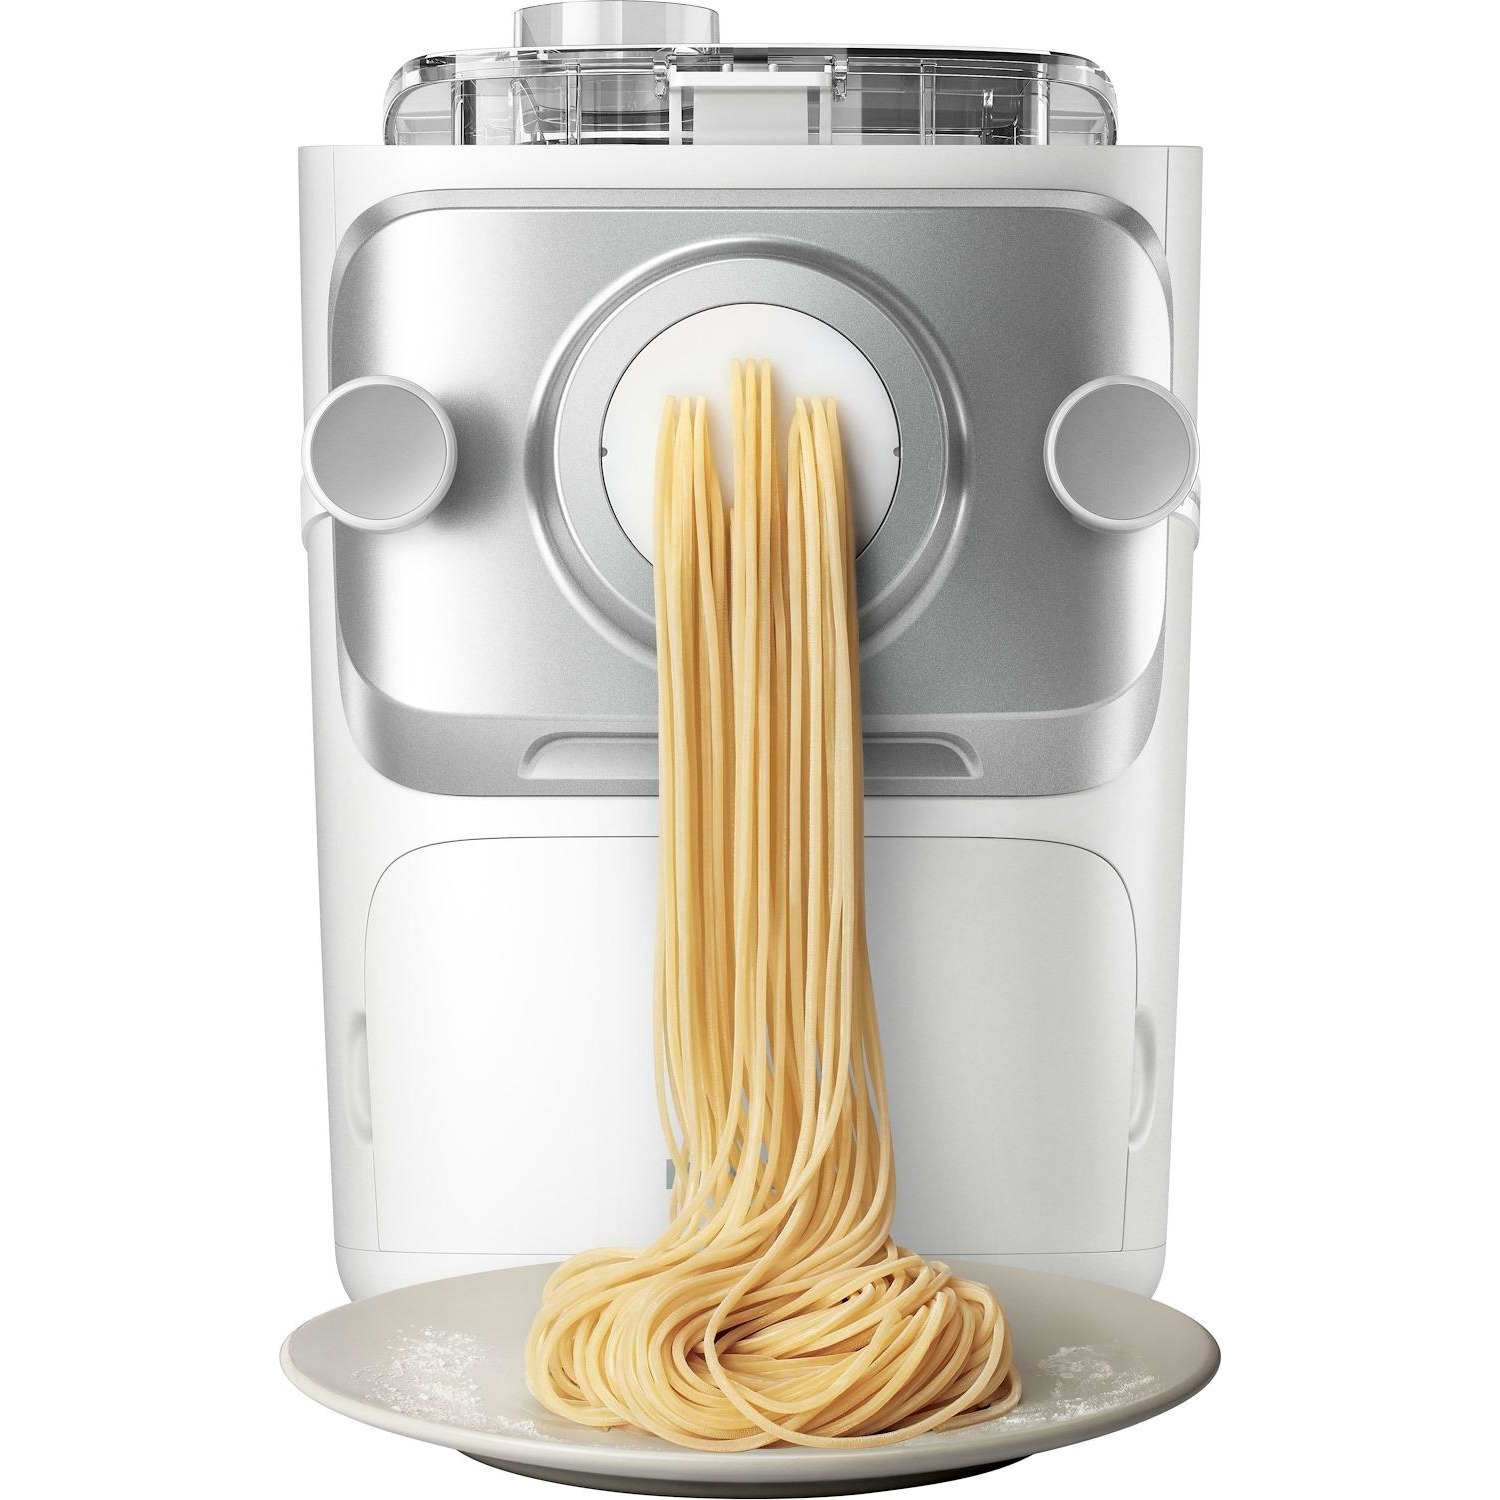 Immagine per Robot impastatrice pasta fresca Philips Pasta Maker HR2660/00 da DIMOStore